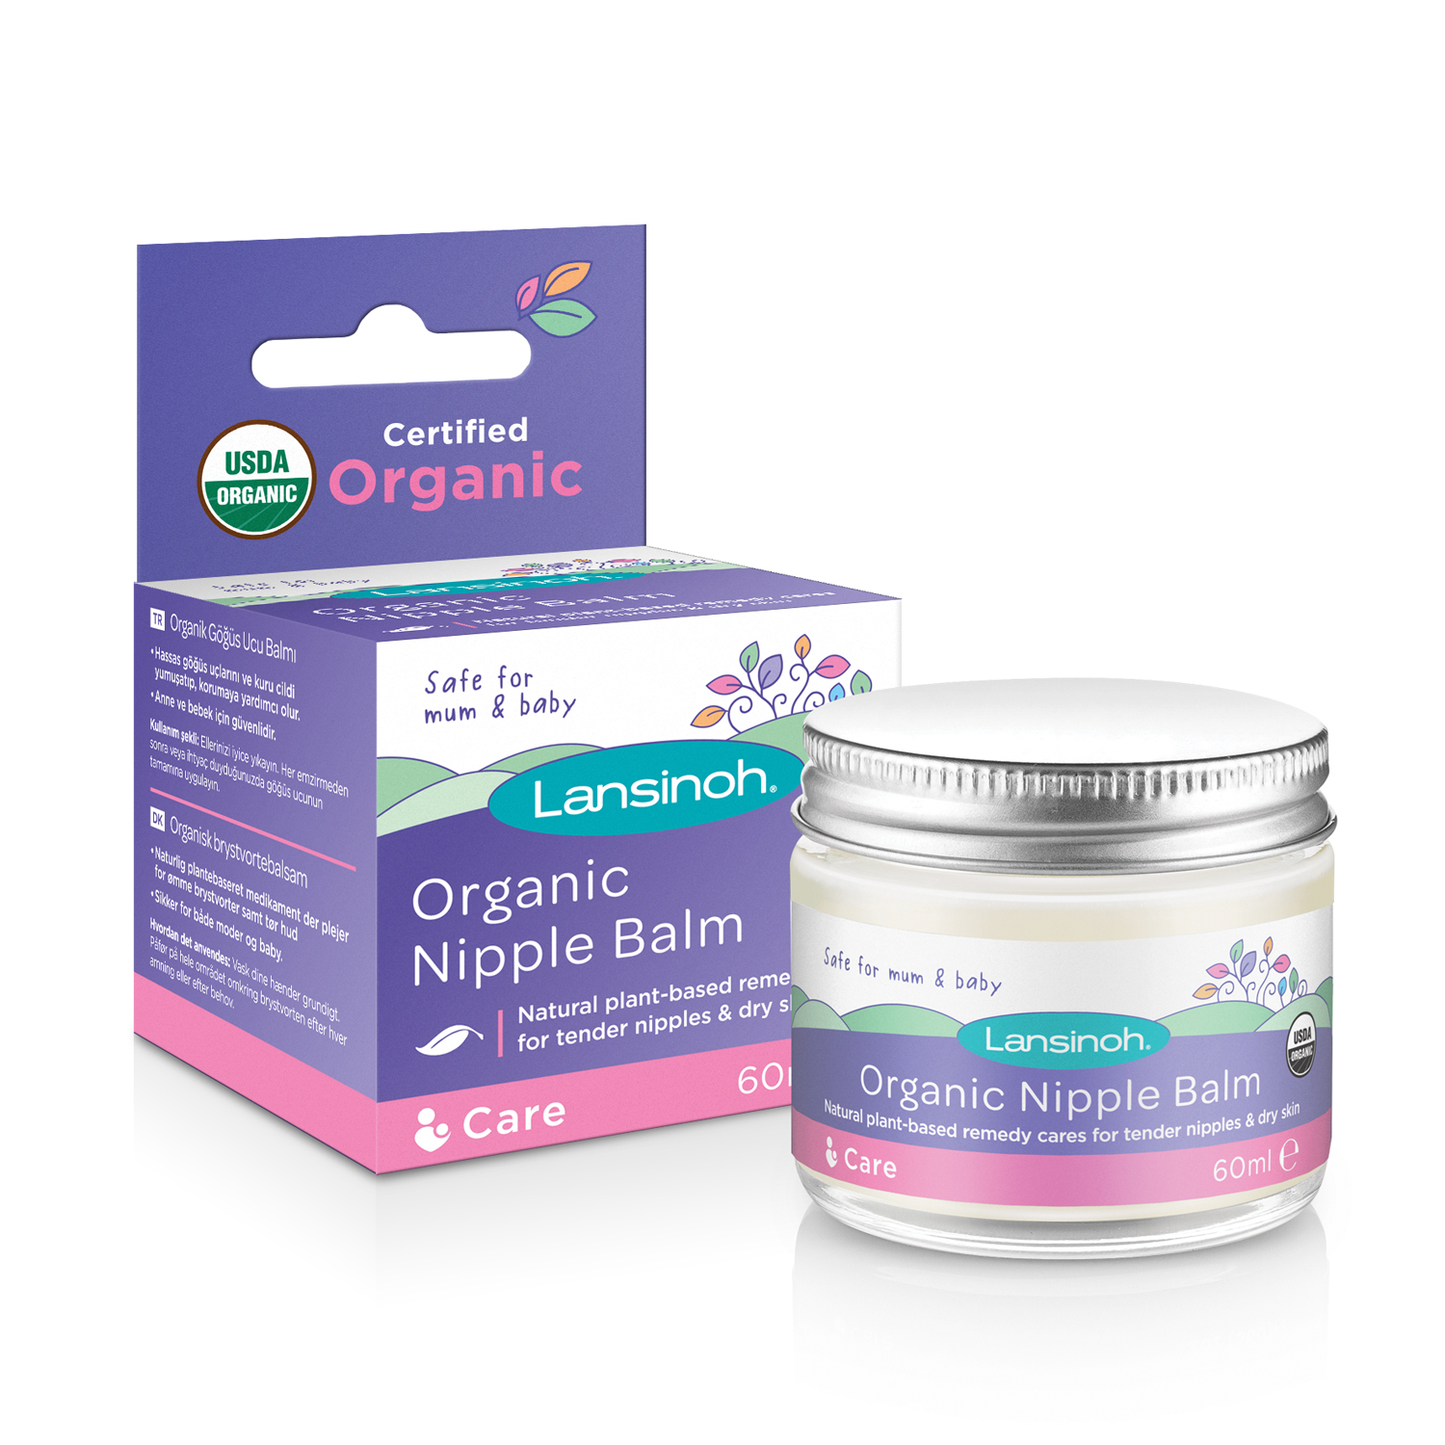 Lansinoh Organic Plant Based Nipple Balm Remedy Cares for Tender Nipples & Dry Skin 60ml